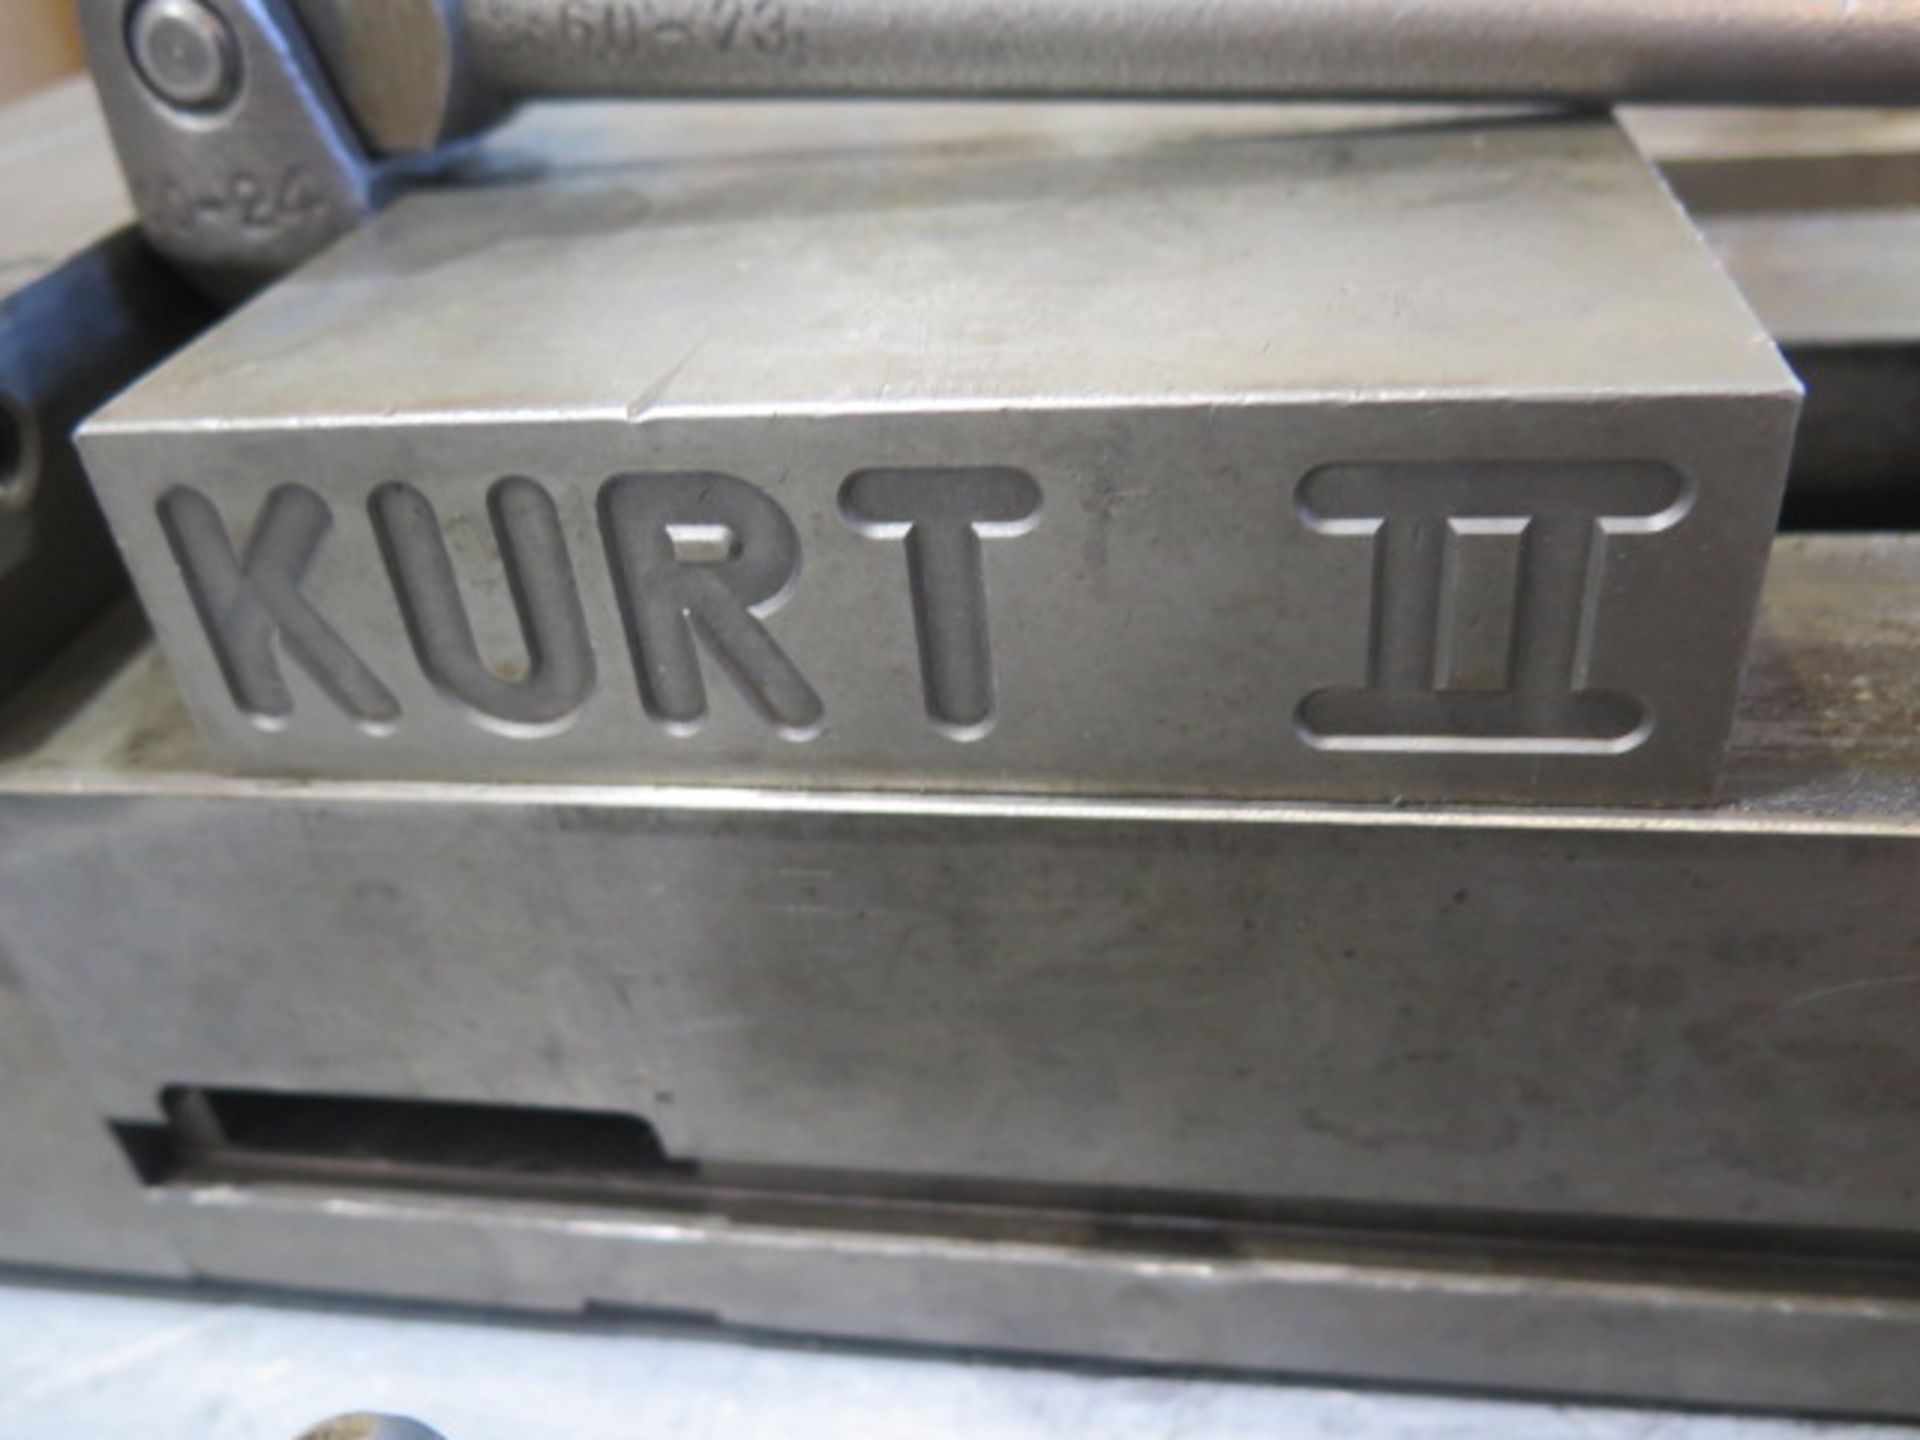 Kurt II 6" Angle-Lock Vise (SOLD AS-IS - NO WARRANTY) - Image 4 of 4